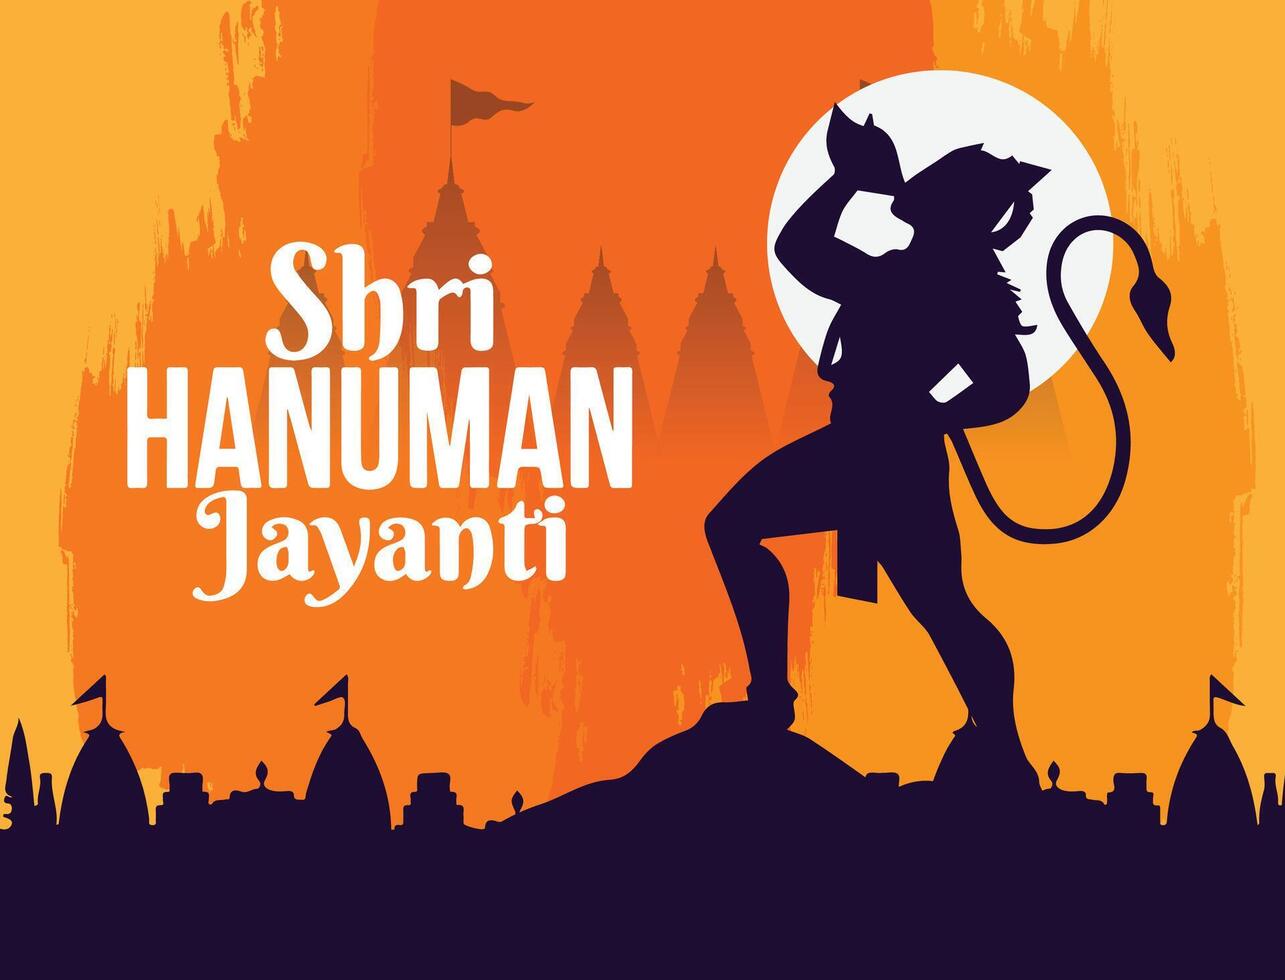 Hanuman Jayanti poster wallpaper design, Hindu God silhouette background, vector banner